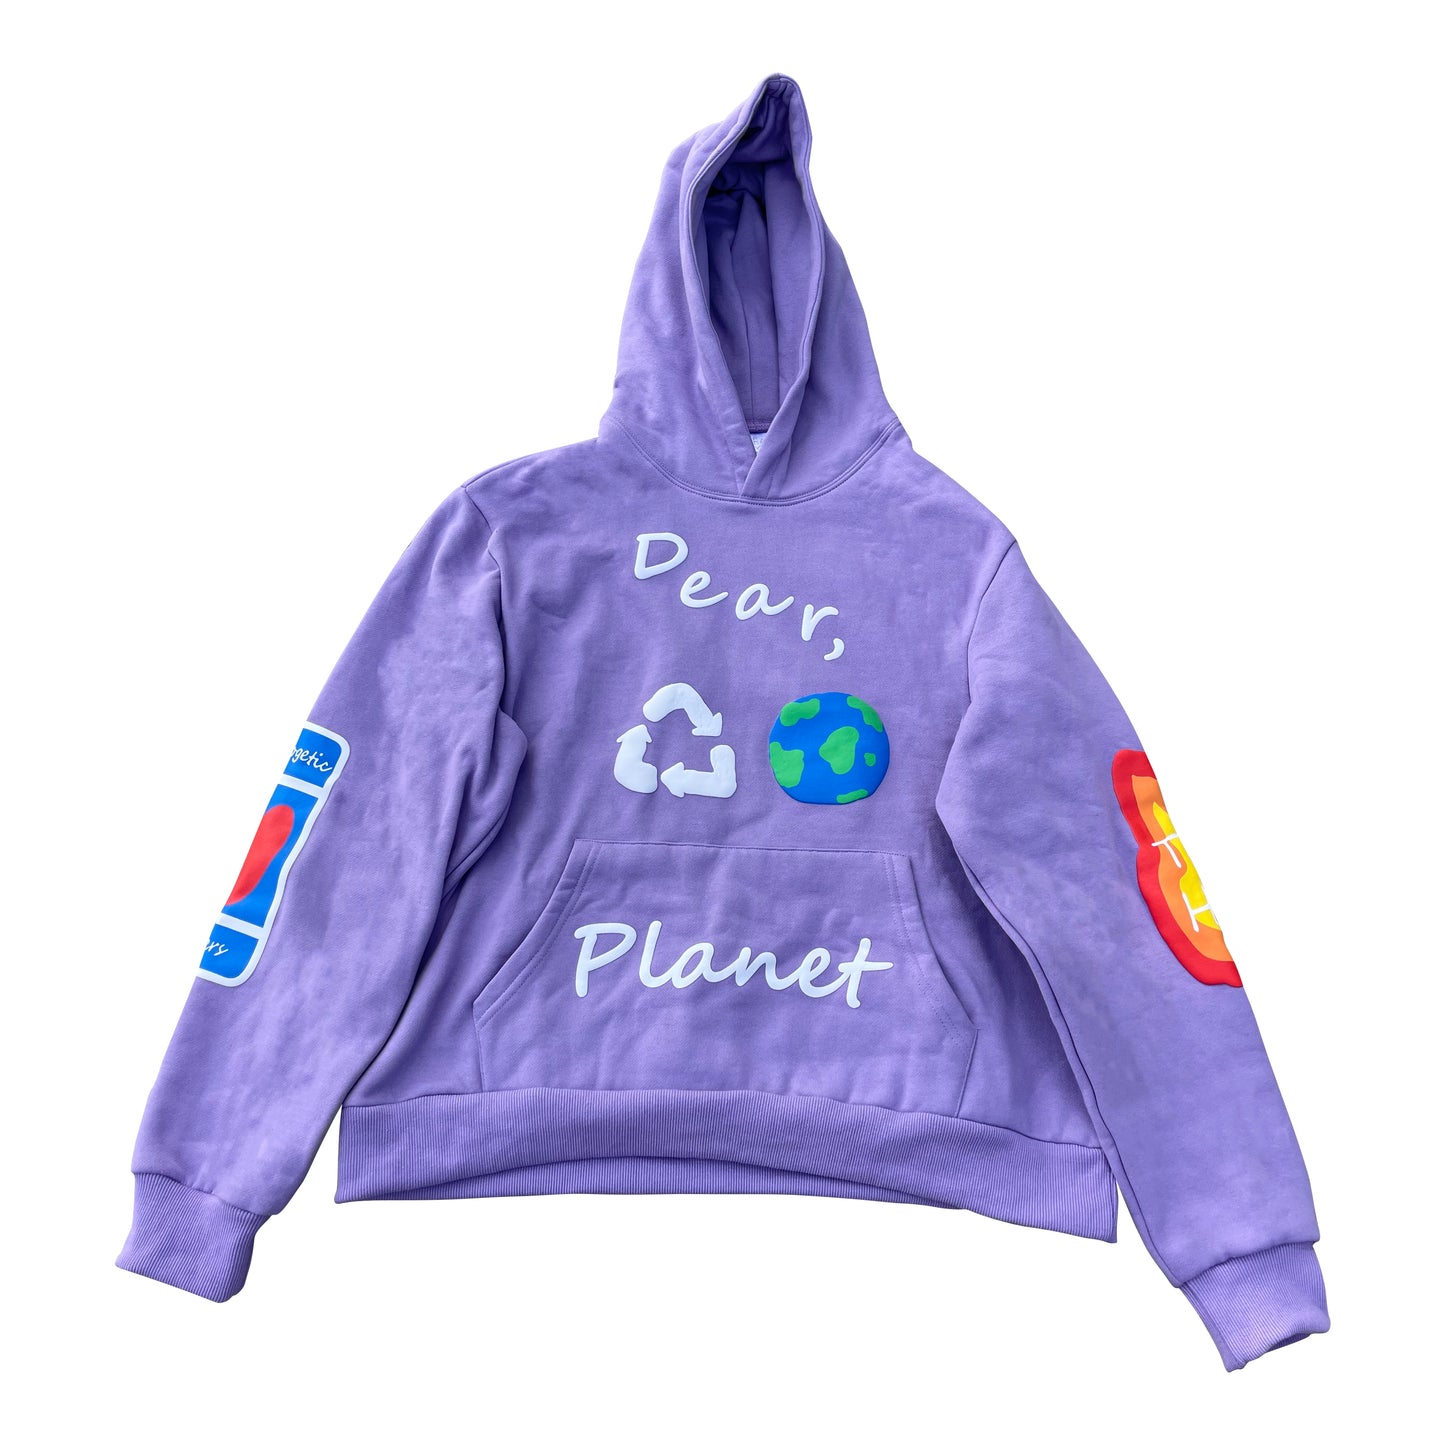 Dear Planet Hoodie - Lilac